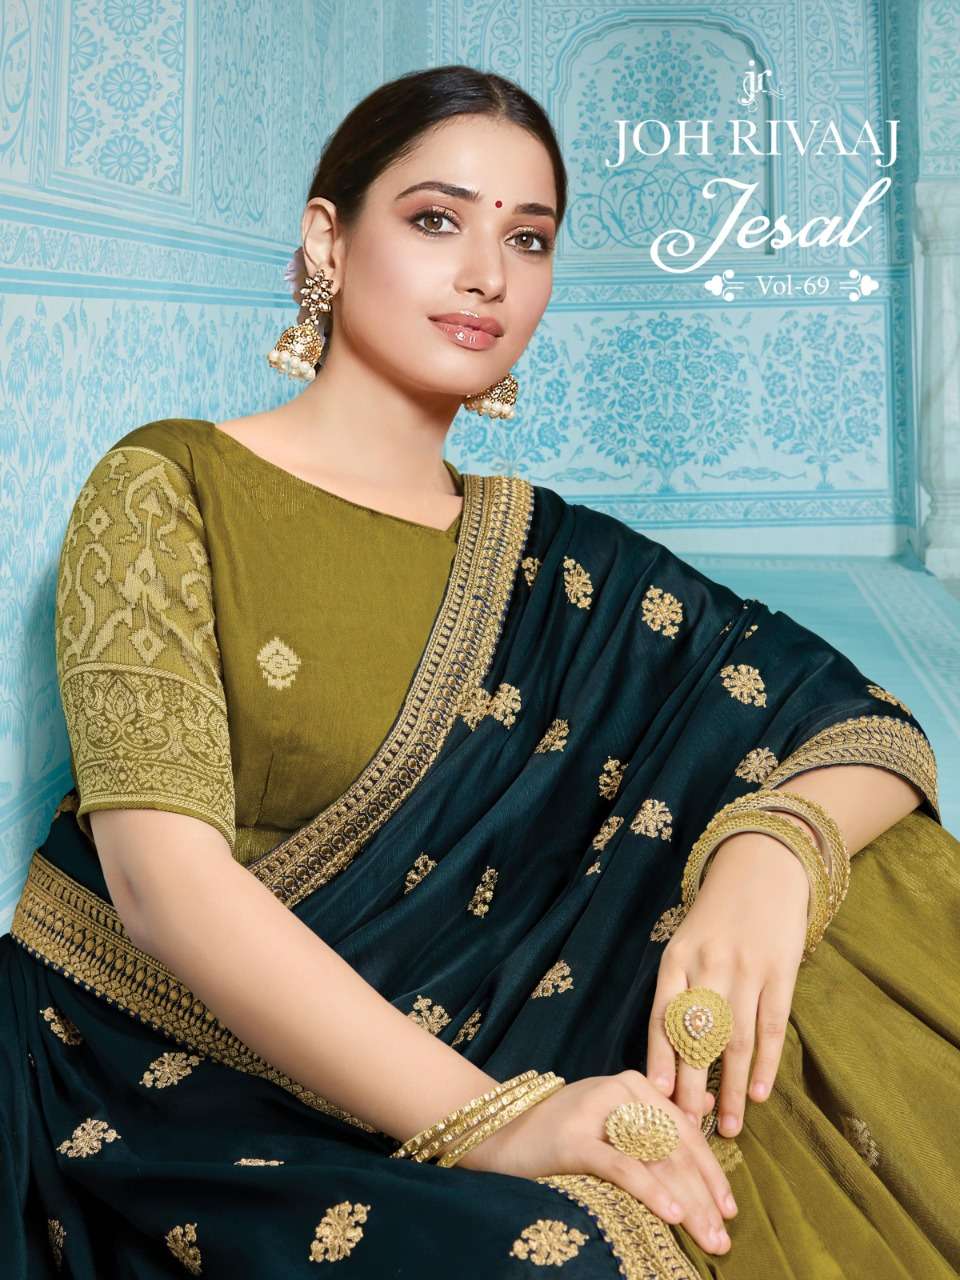 joh rivaaj jesal vol 69 series 6901-6911 fancy sarees collection 